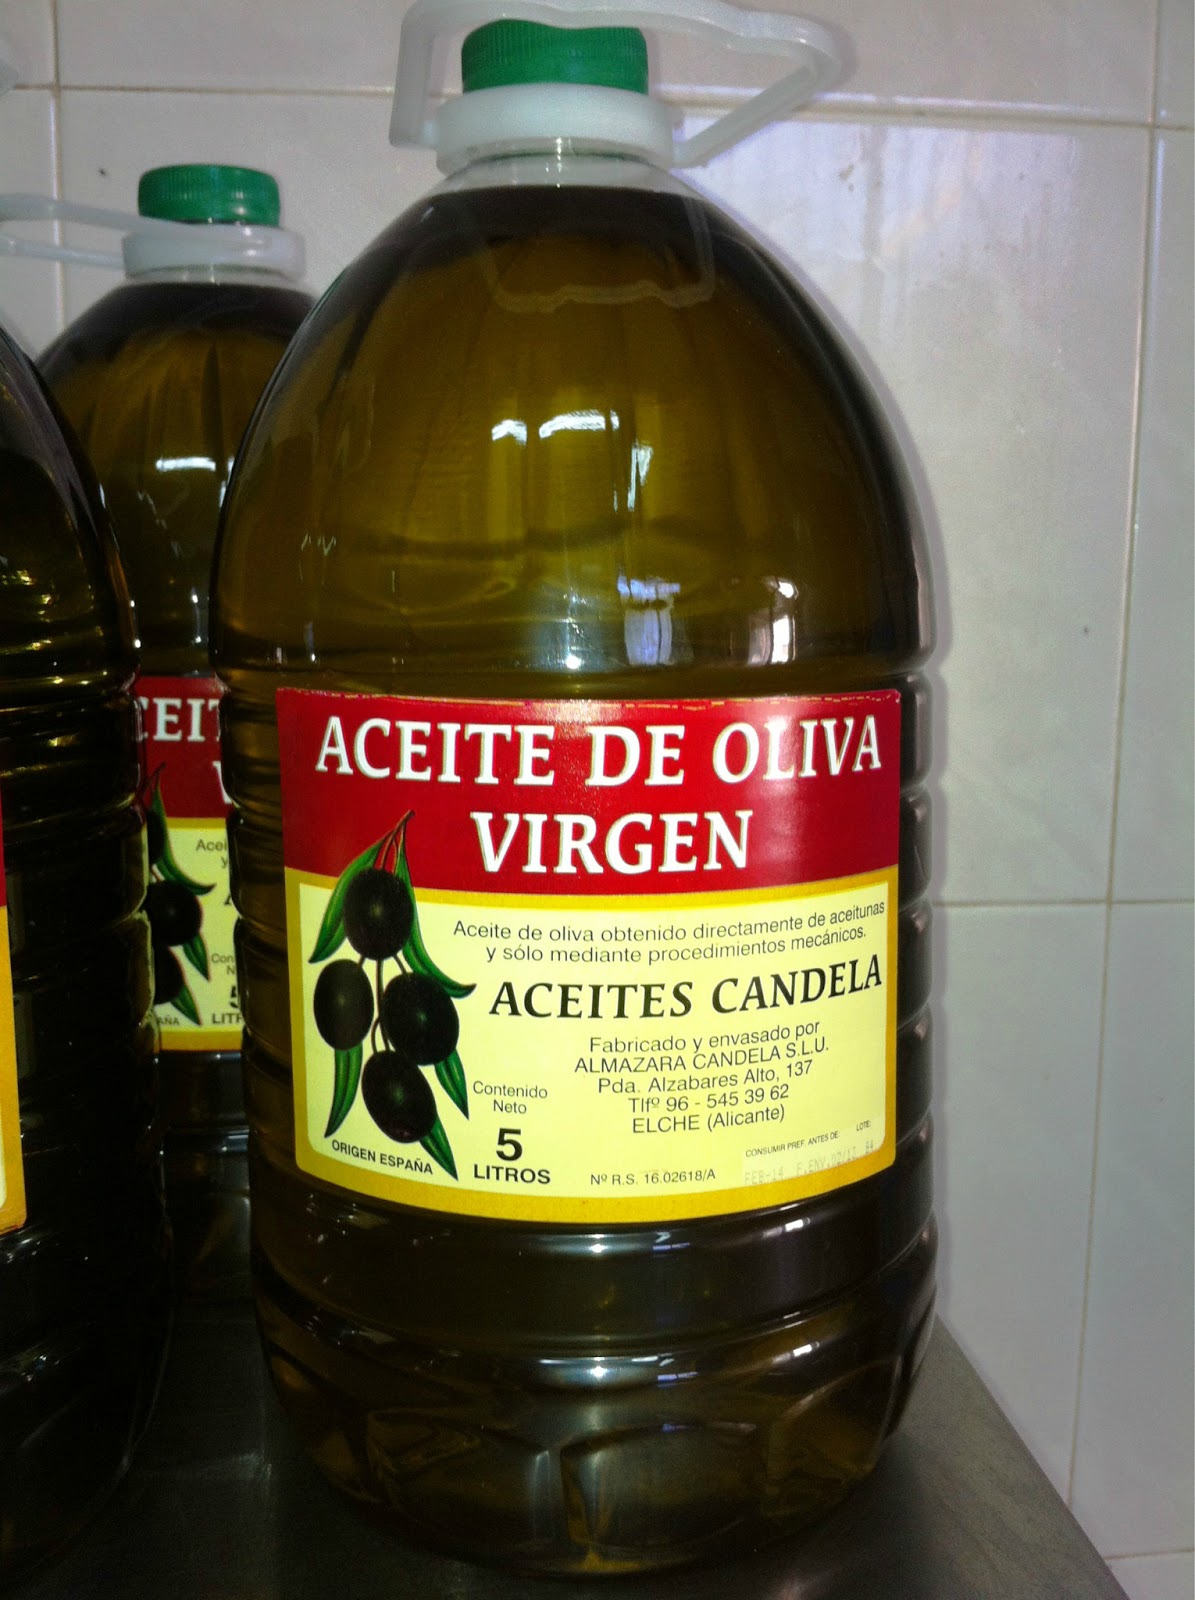 Virgin olive oil. 